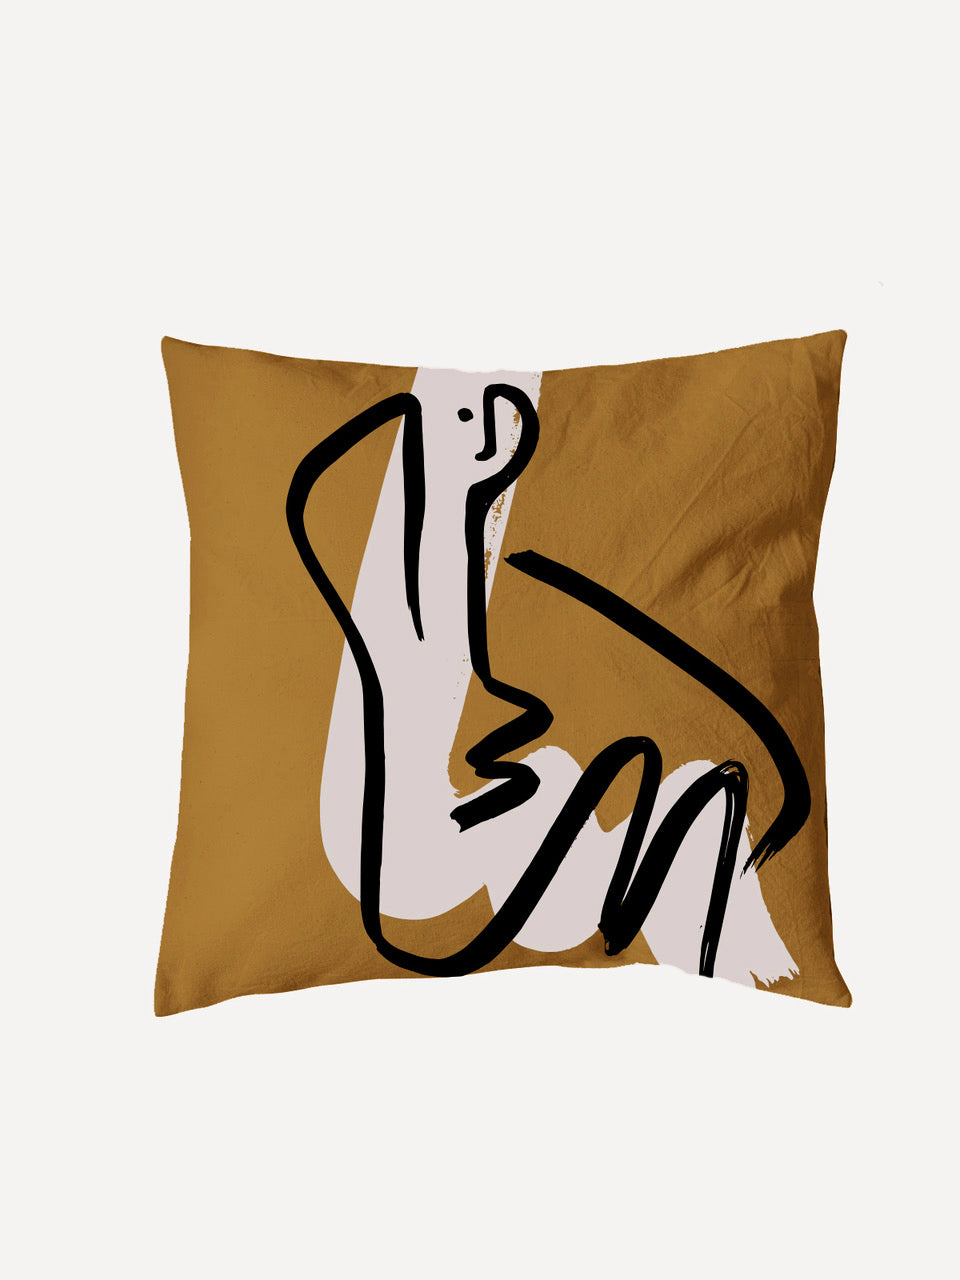 Muse pillowcase (female figure)